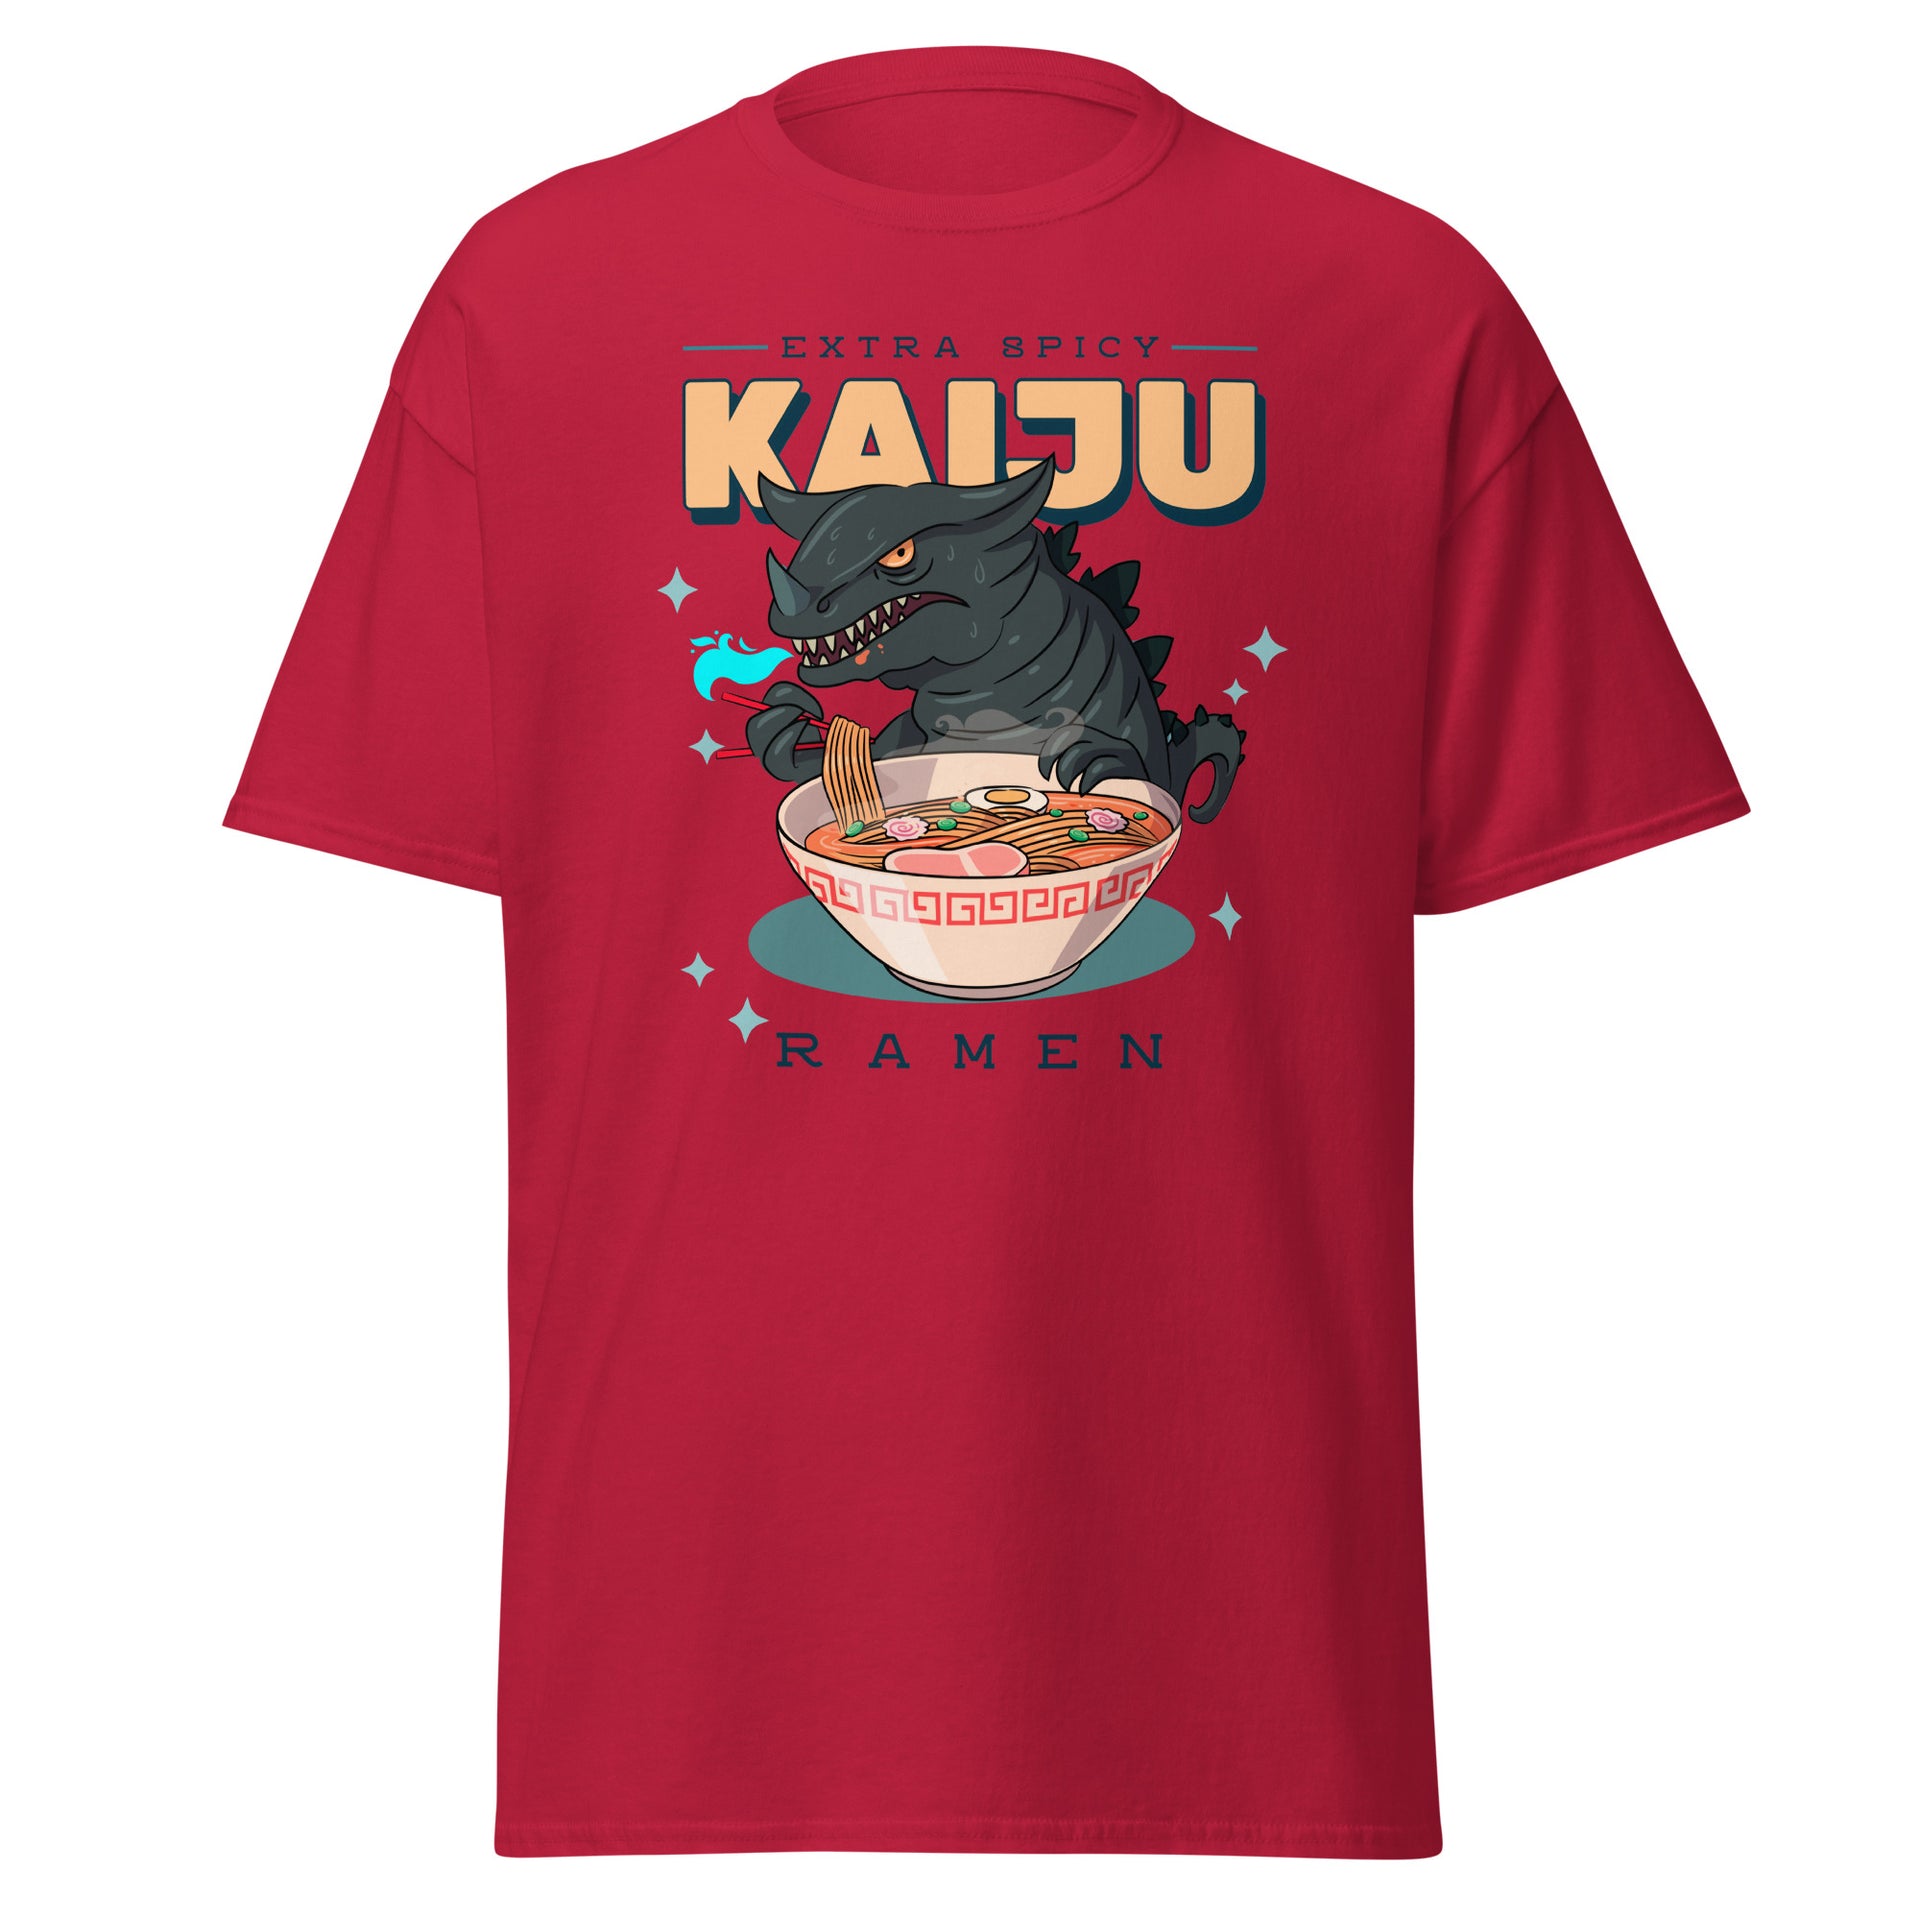 Extra Spicy Kaiju Ramen Men's T-Shirt